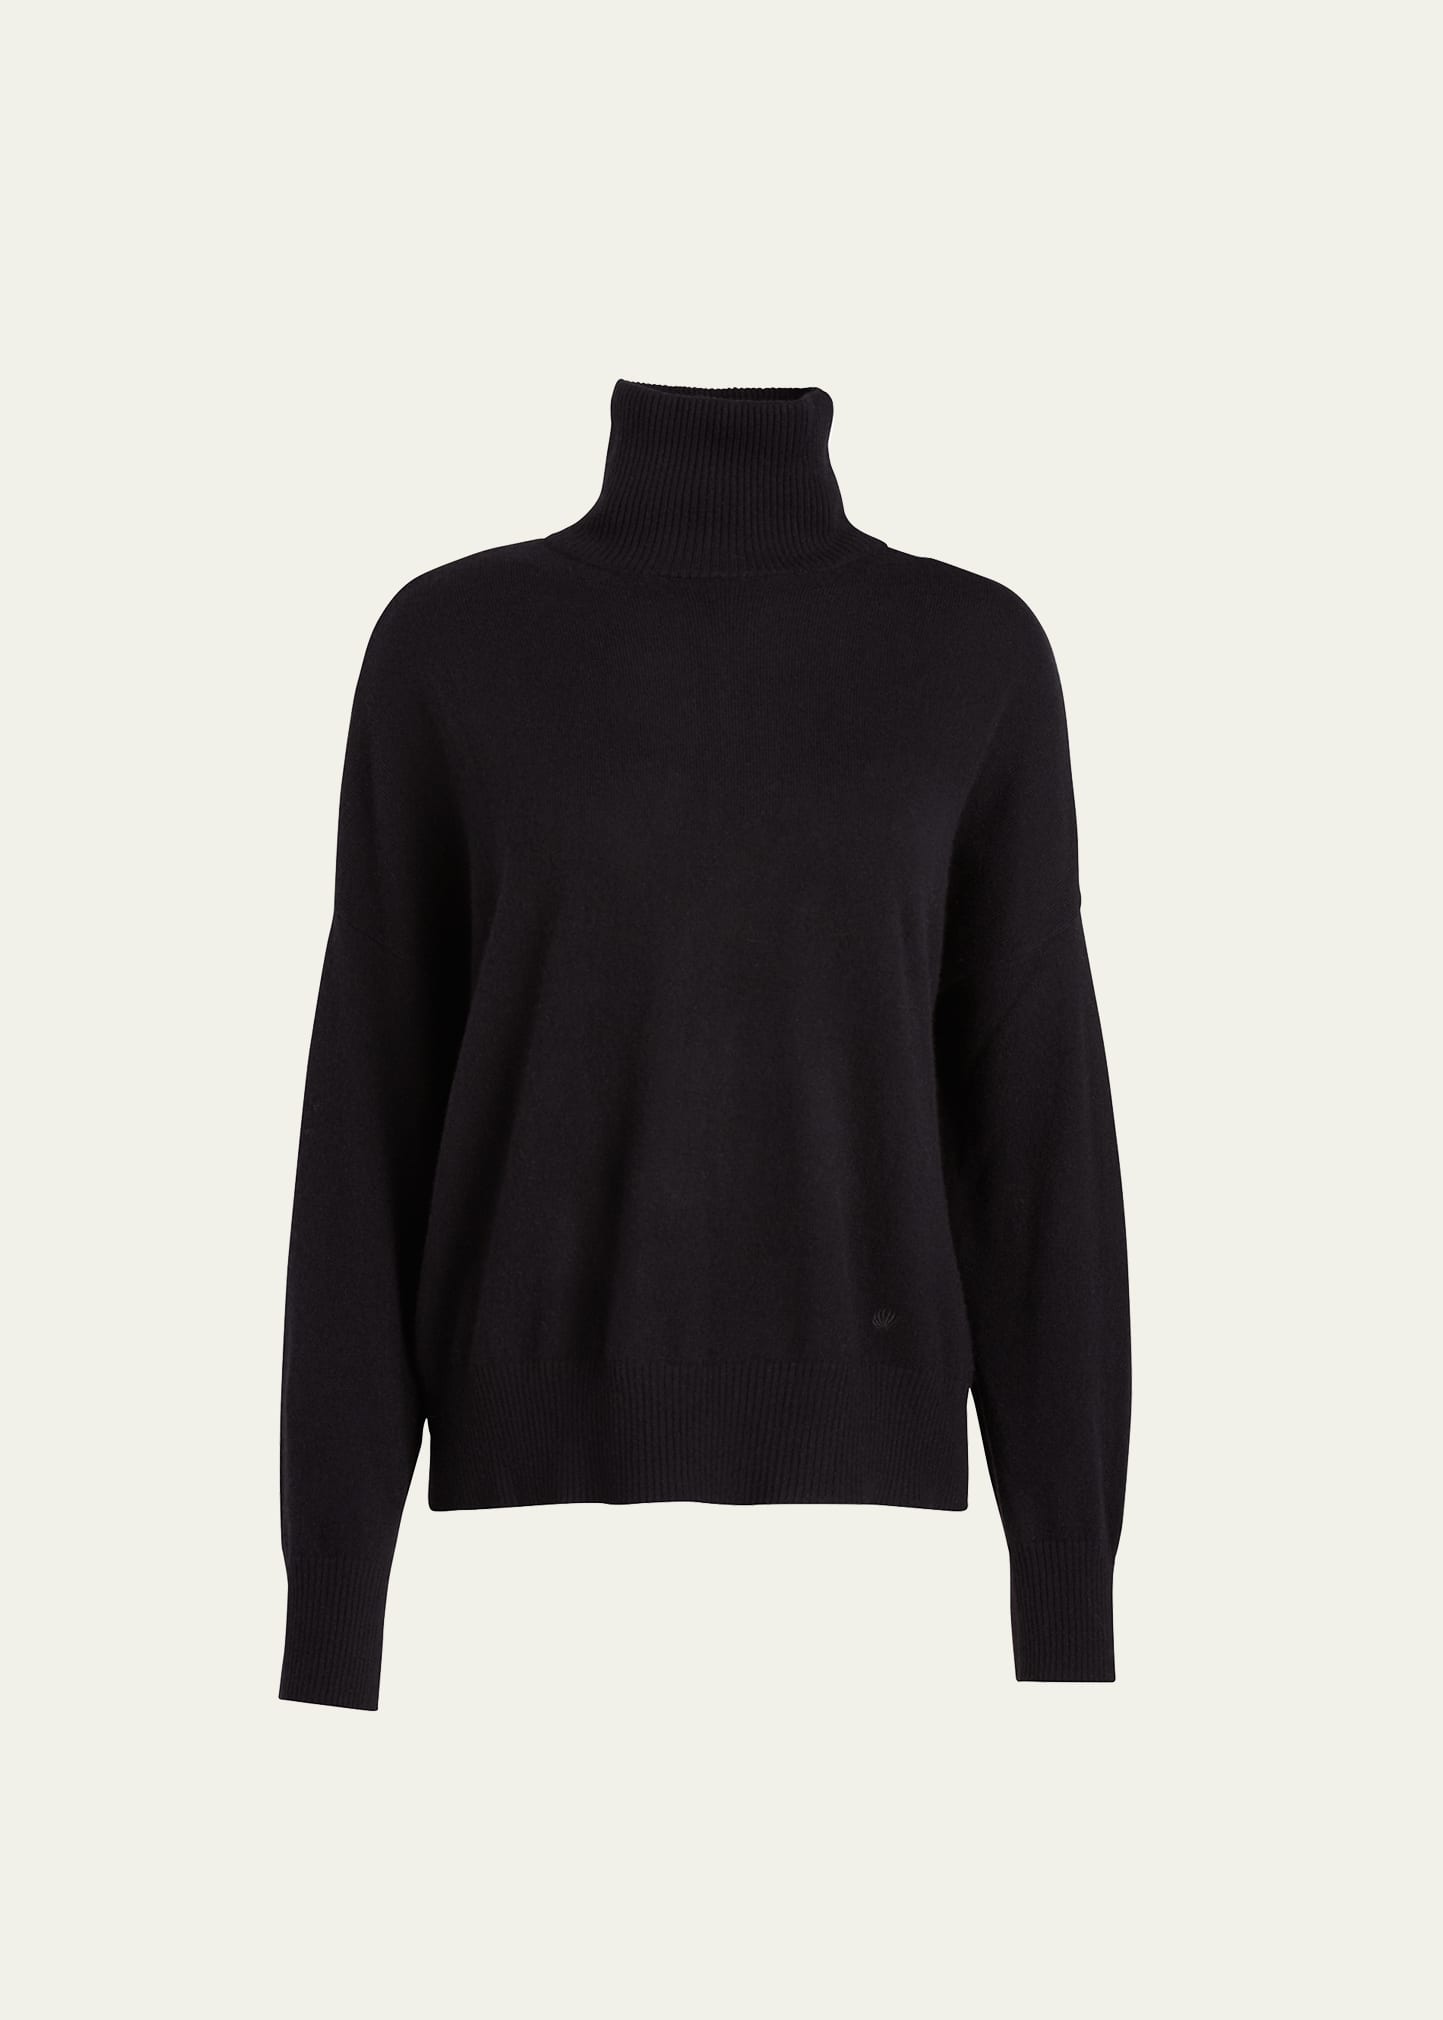 Loulou Studio Cashmere Drop-Shoulder Turtleneck Sweater